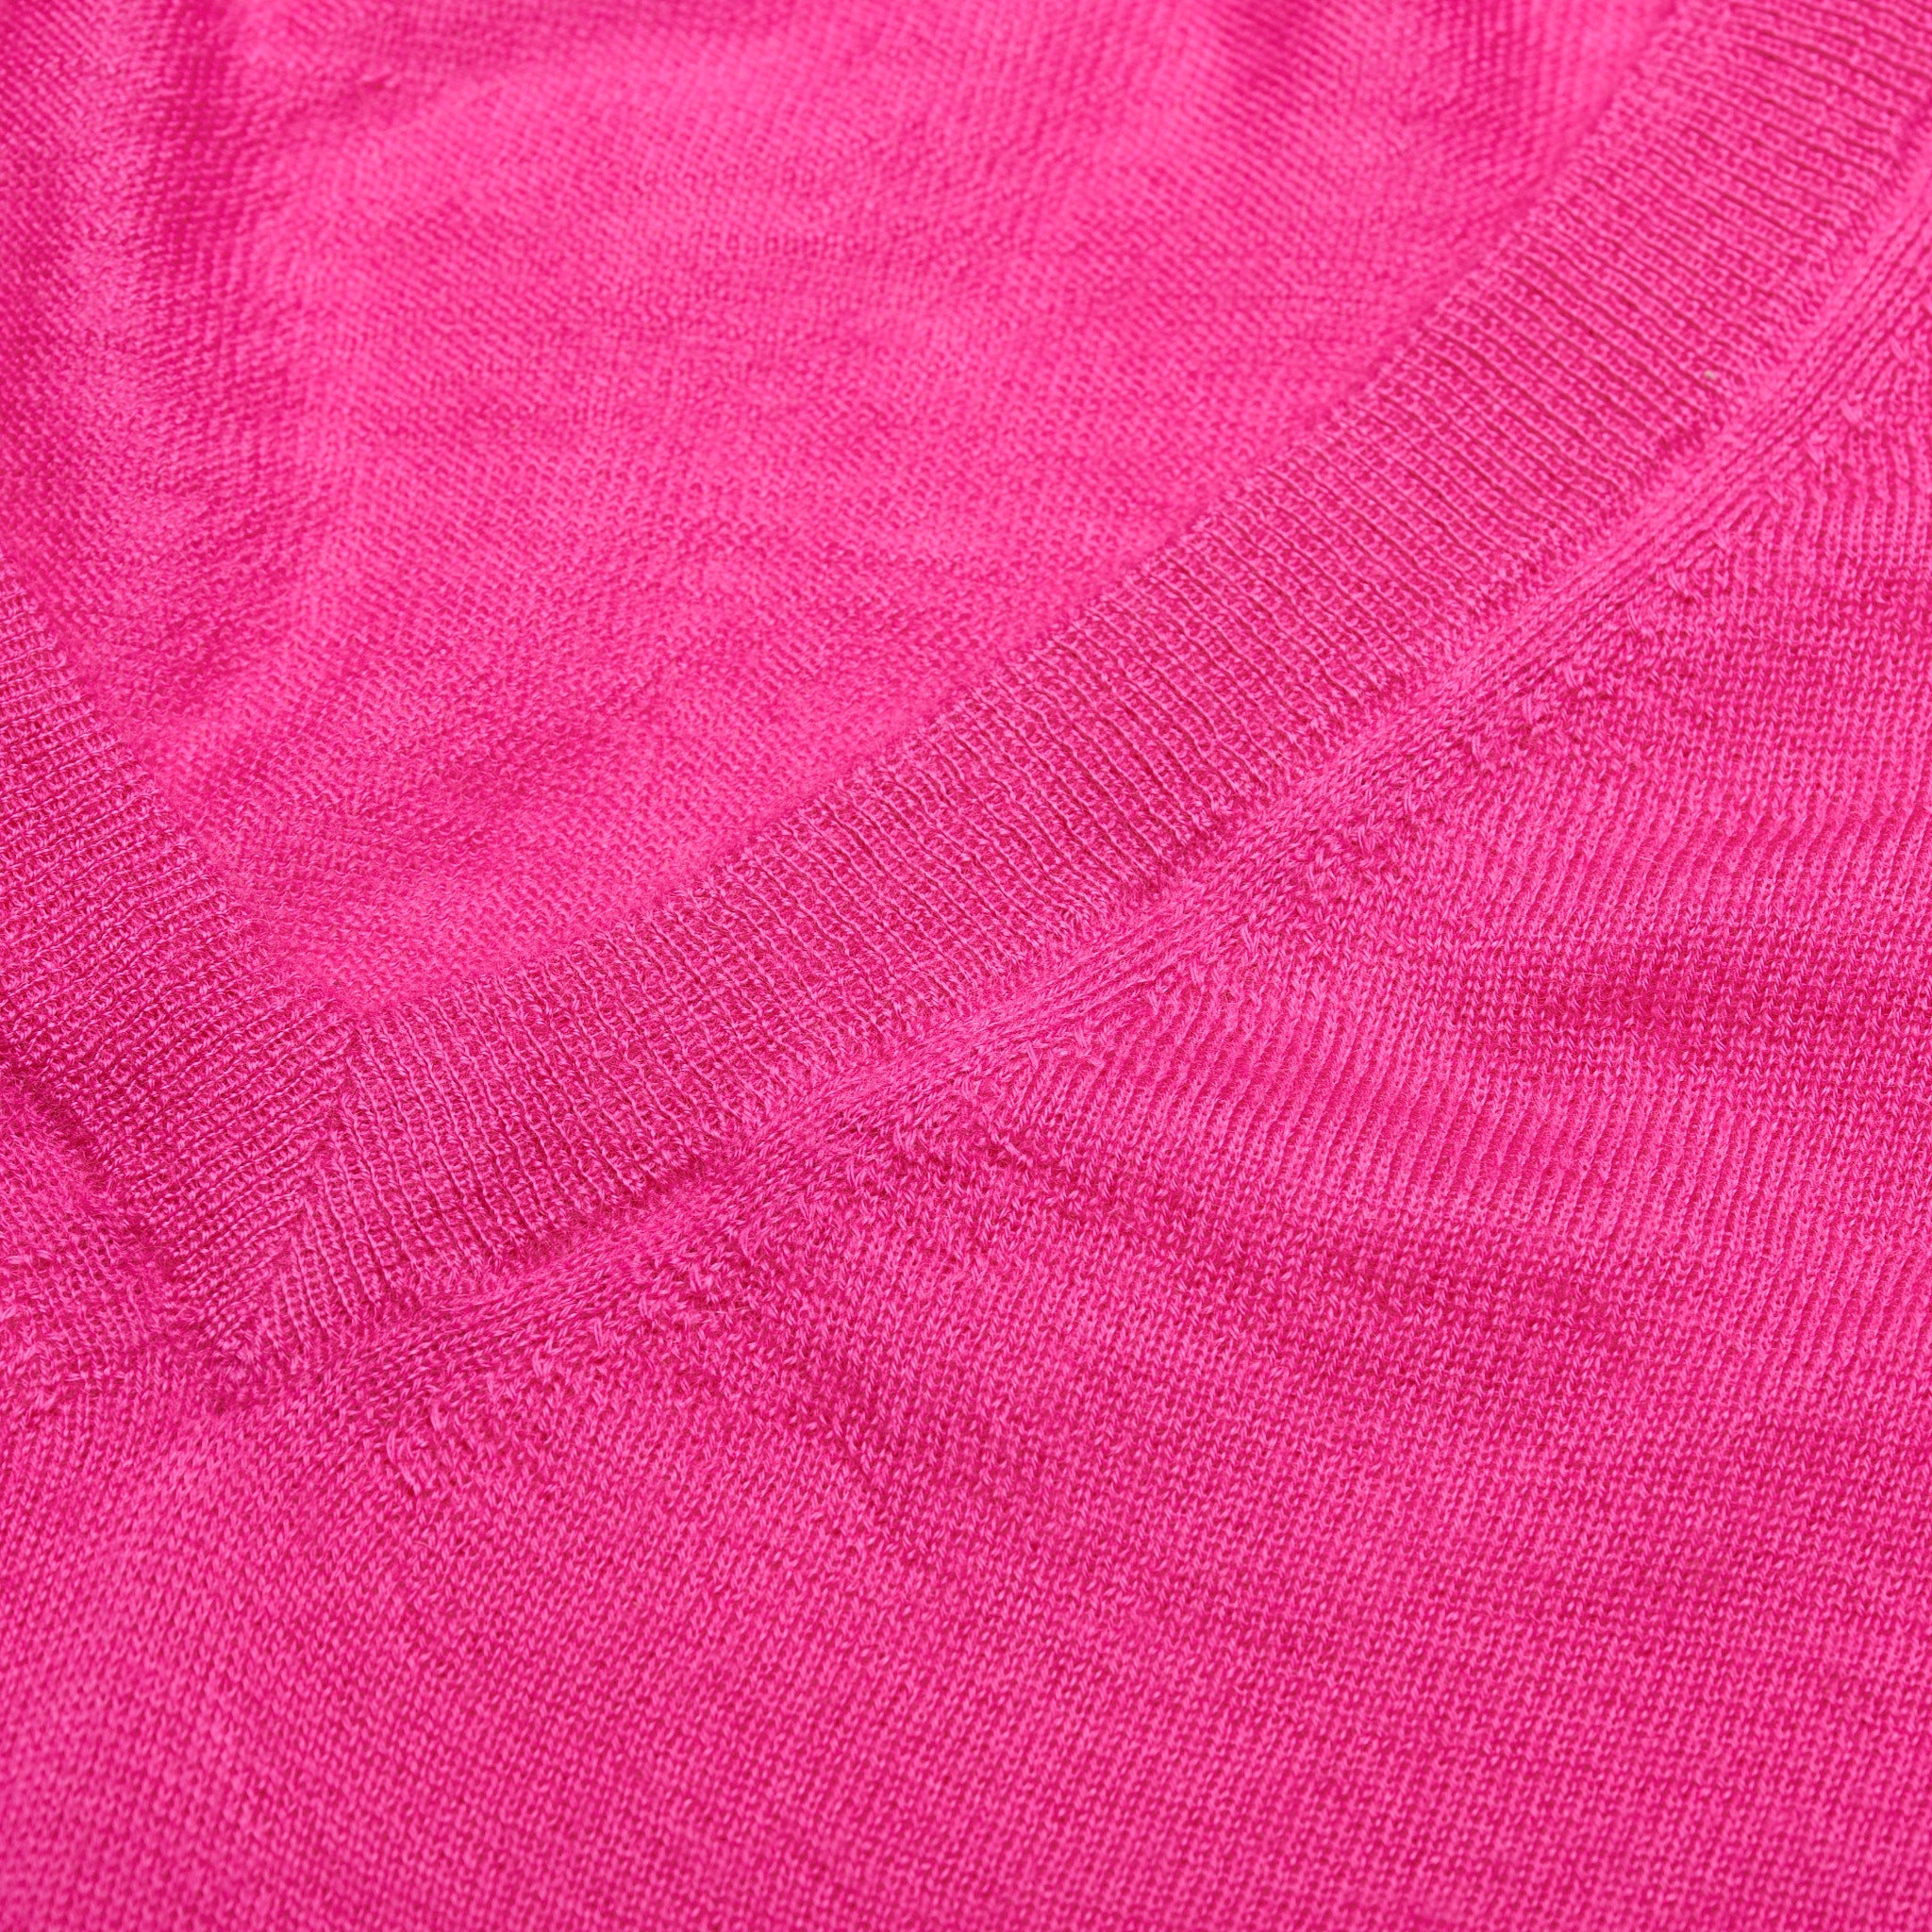 FEDELI Magenta Pink Cashmere V-Neck Sweater EU 50 NEW US M FEDELI